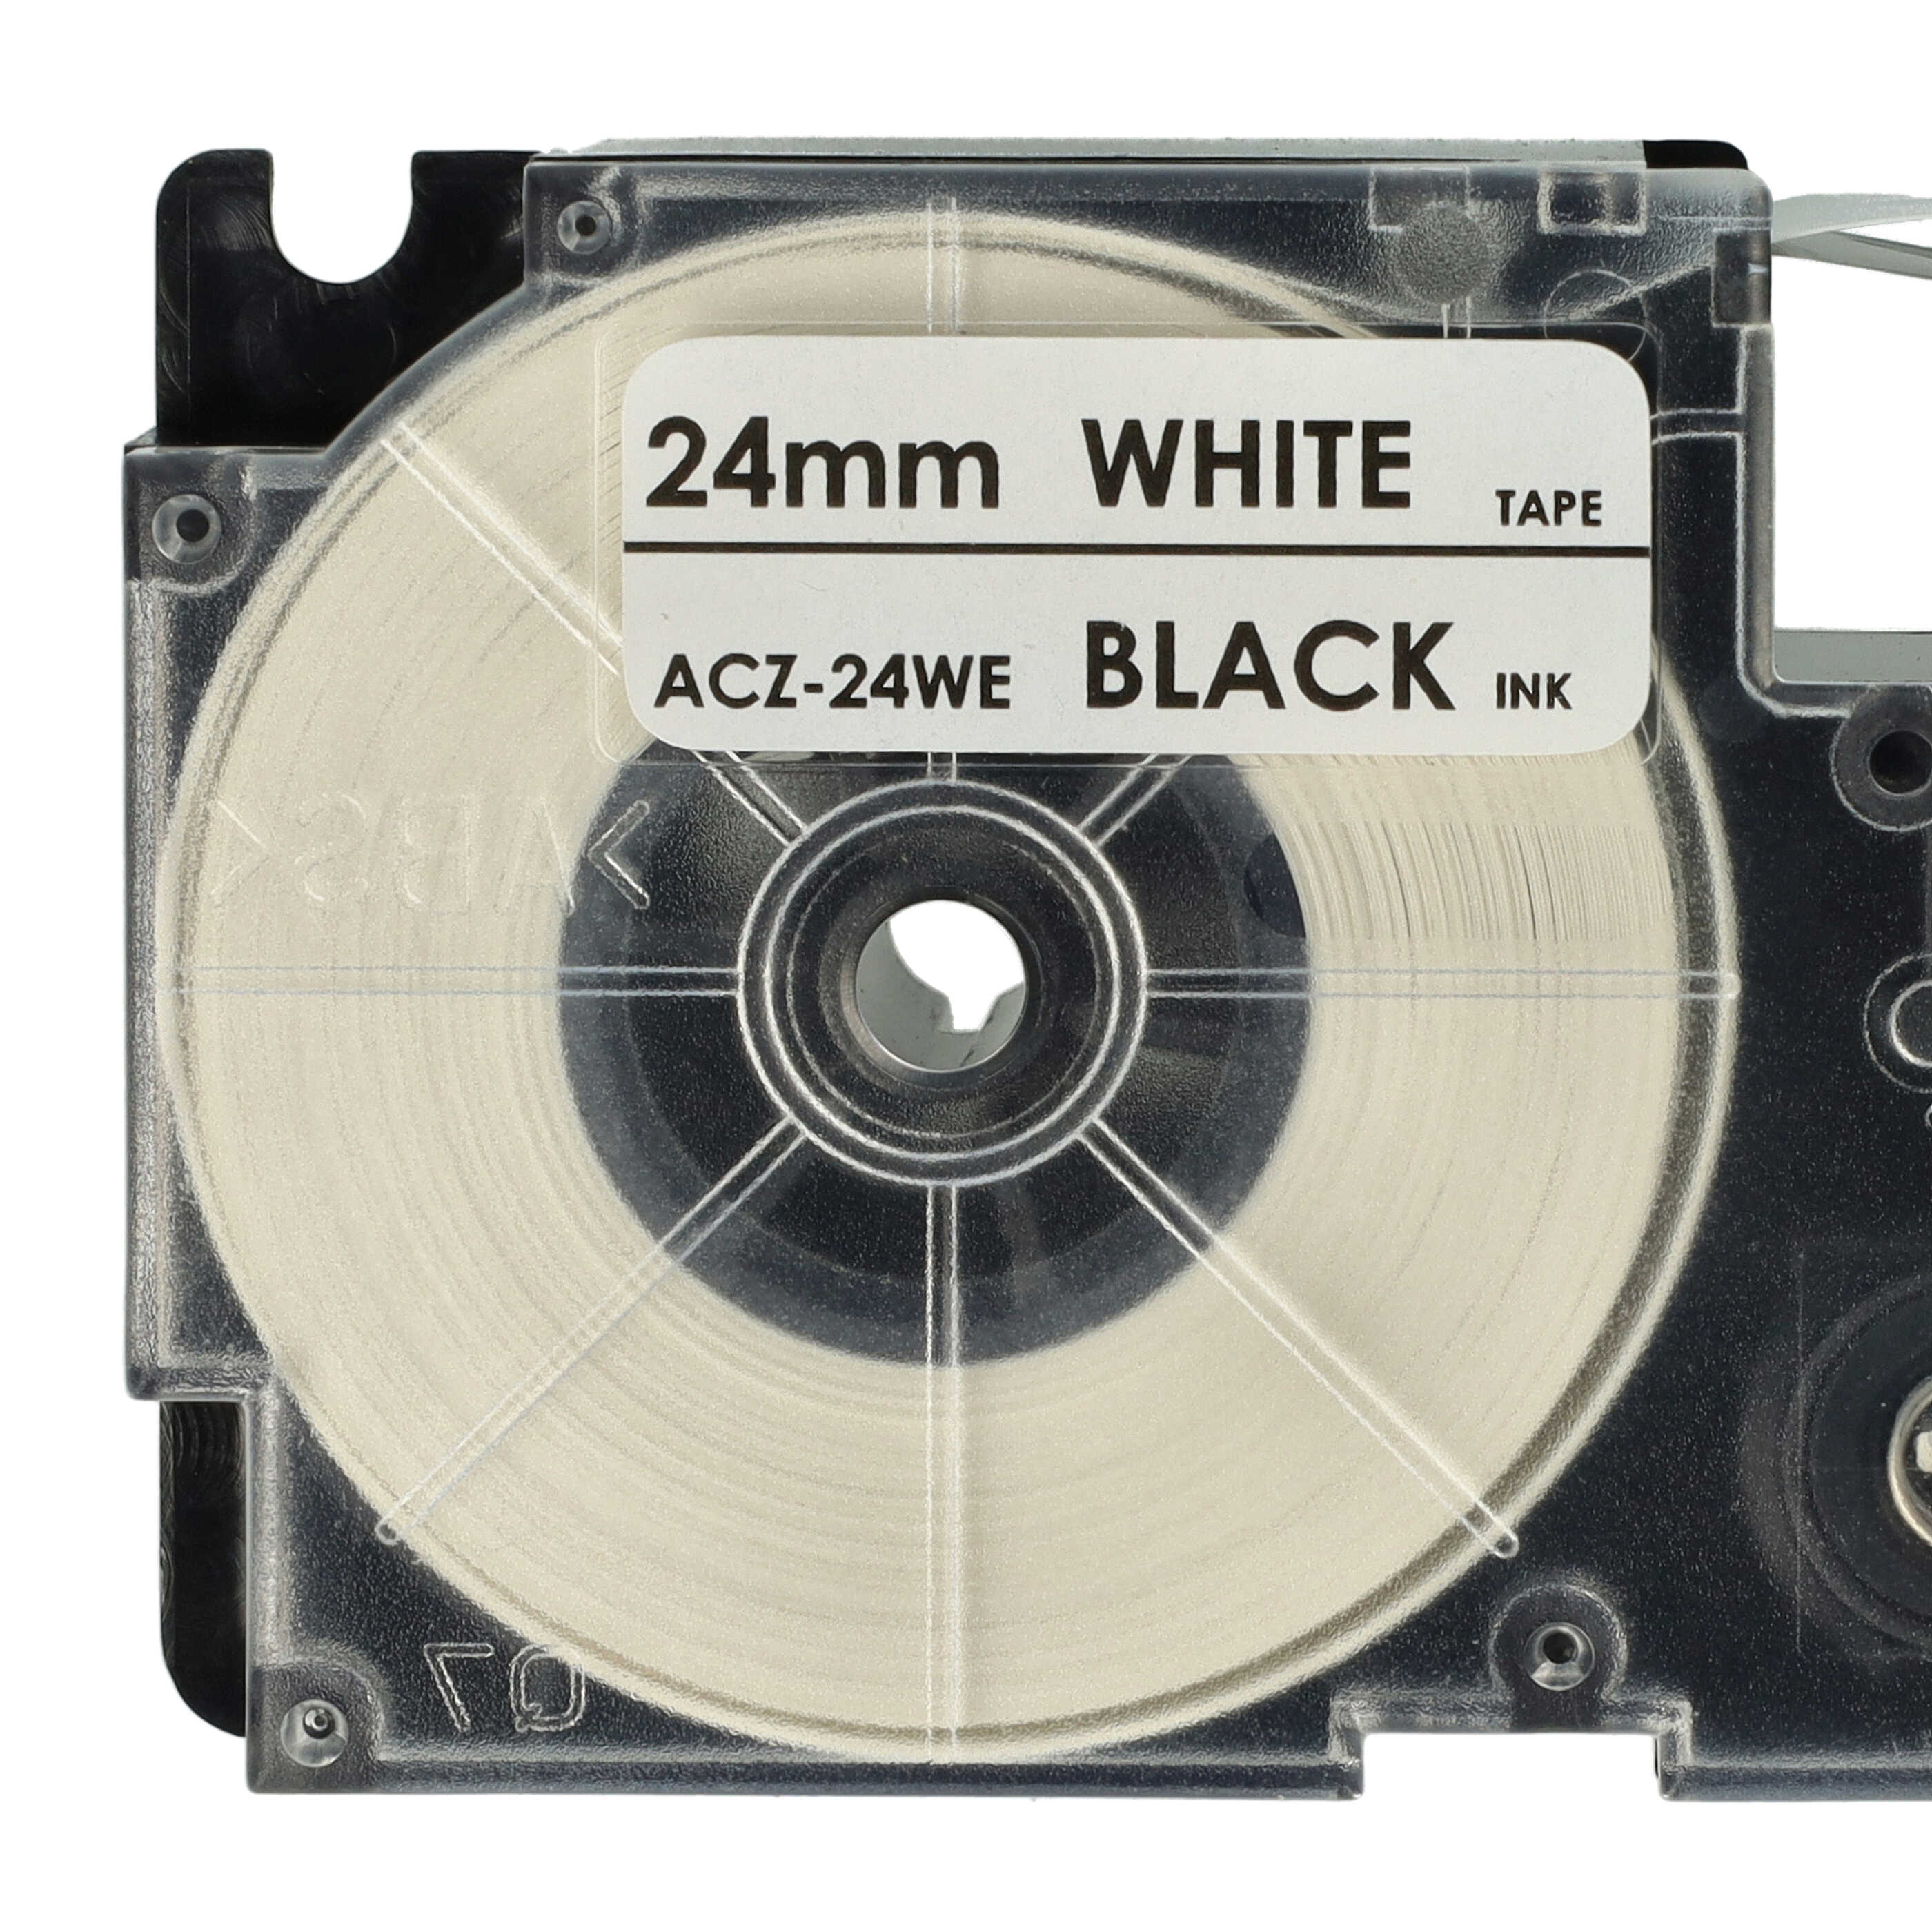 Cassetta nastro sostituisce Casio XR-24WE1, XR-24WE per etichettatrice Casio 24mm nero su bianco